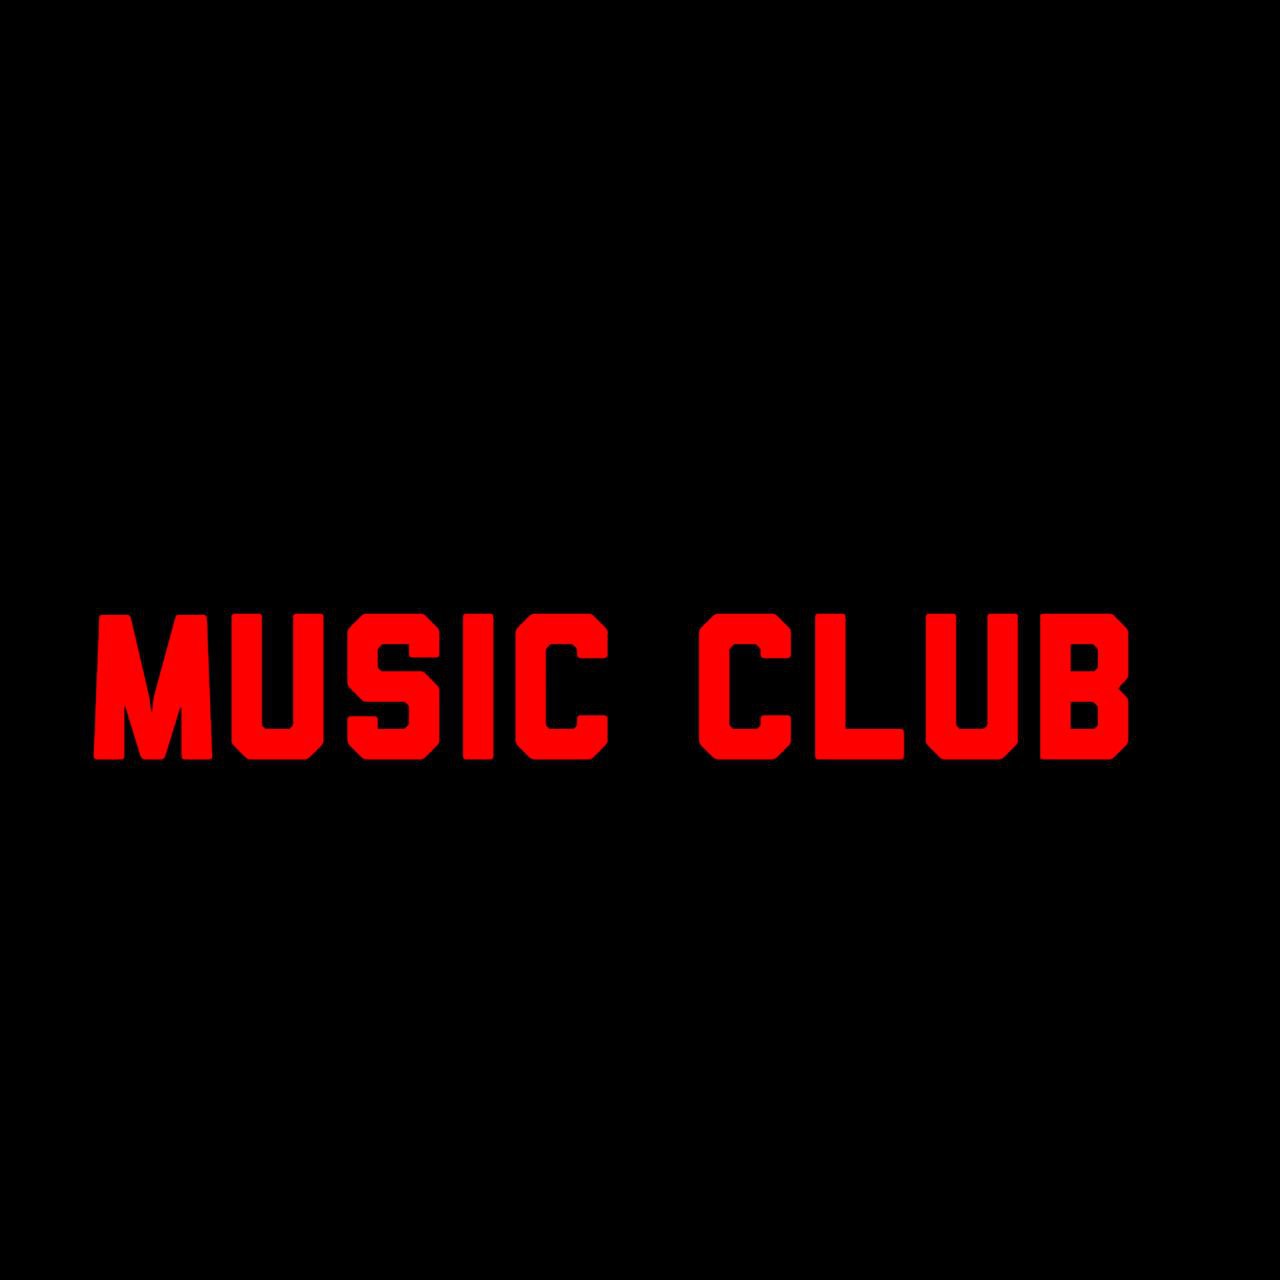 Music club - Загадочная встреча